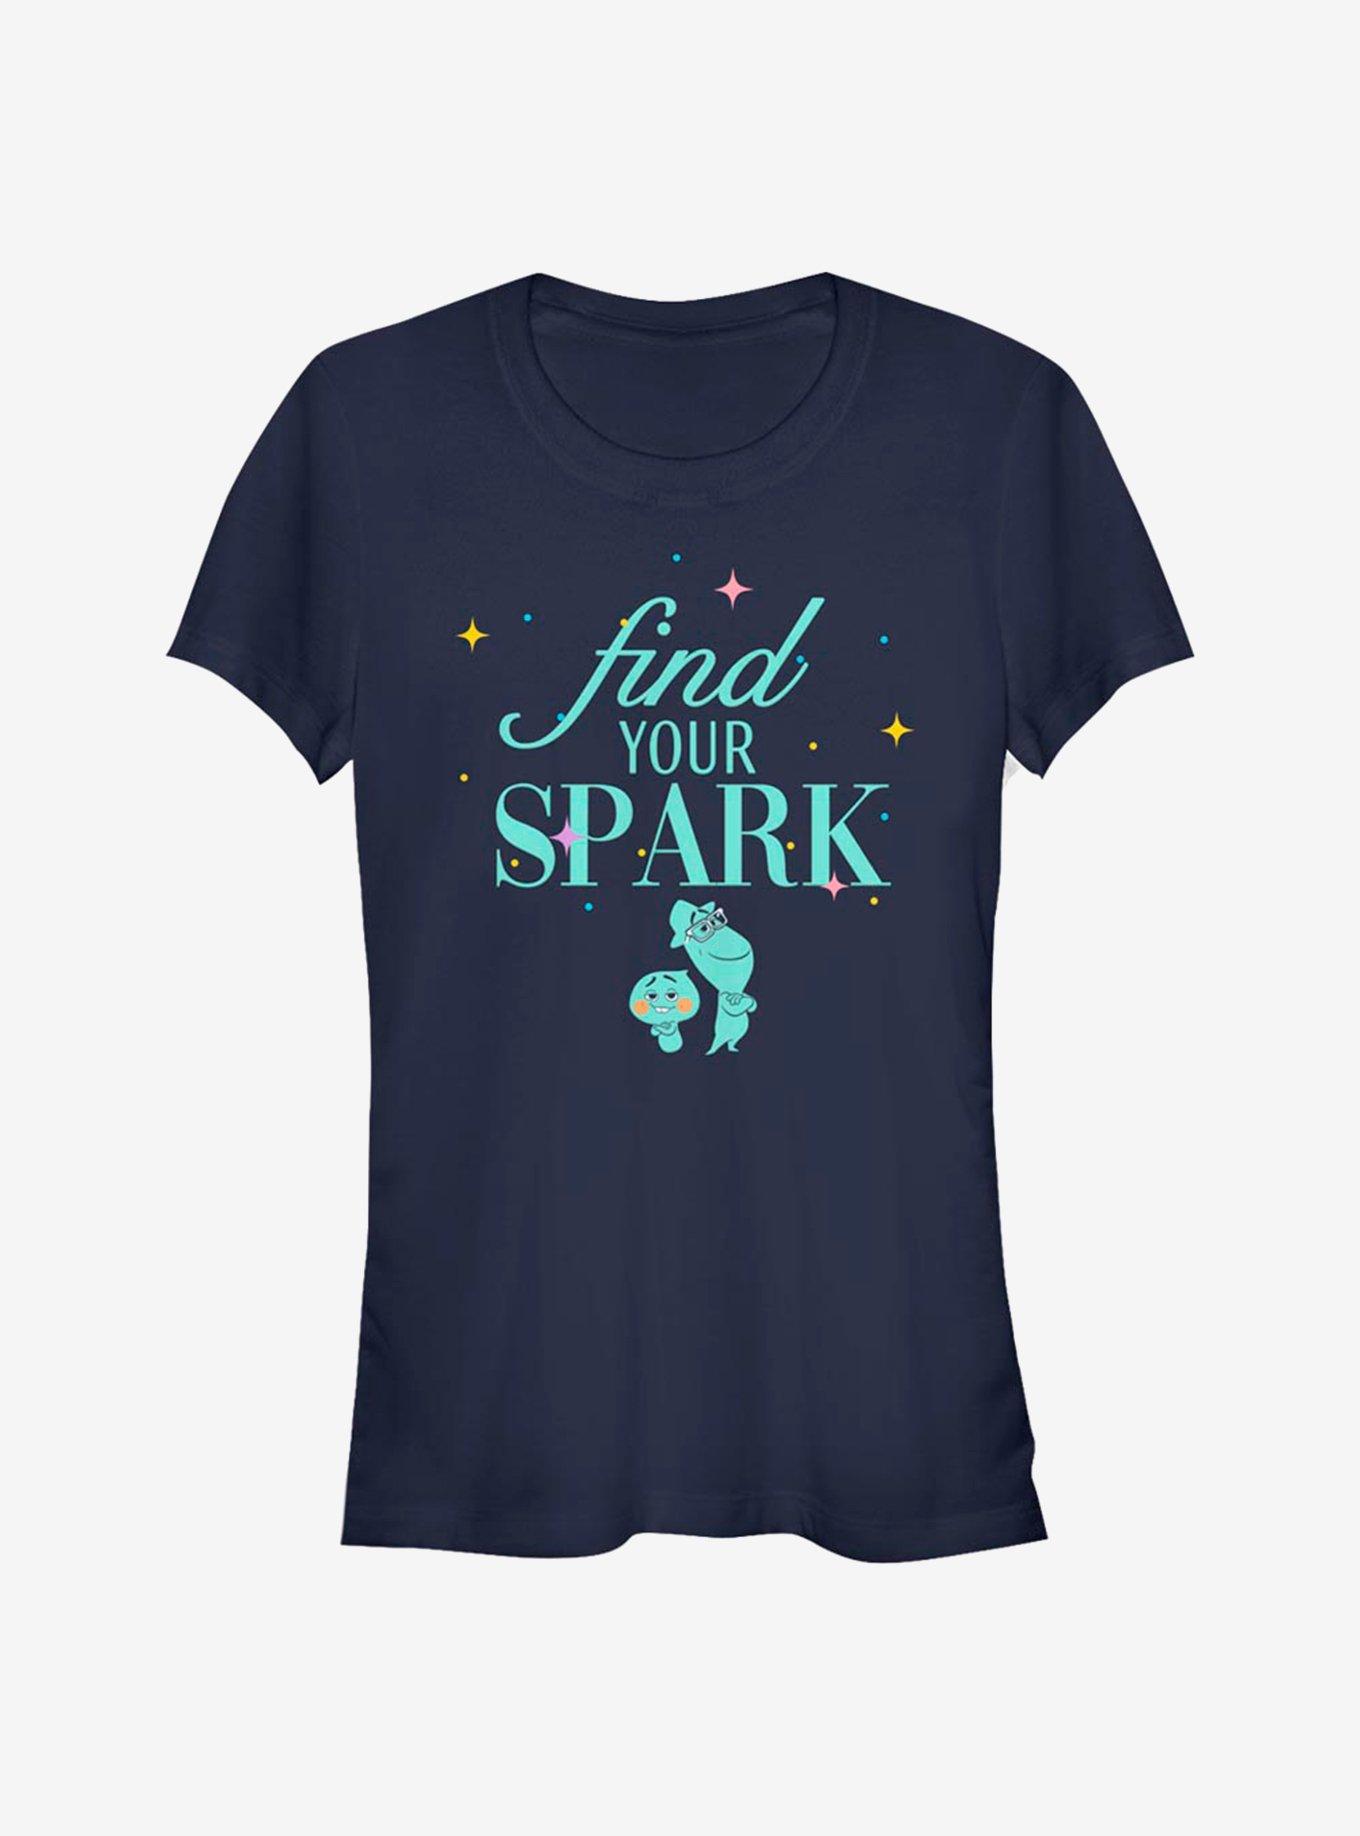 Hot Topic Disney Pixar Soul Find Your Spark Girls T-Shirt